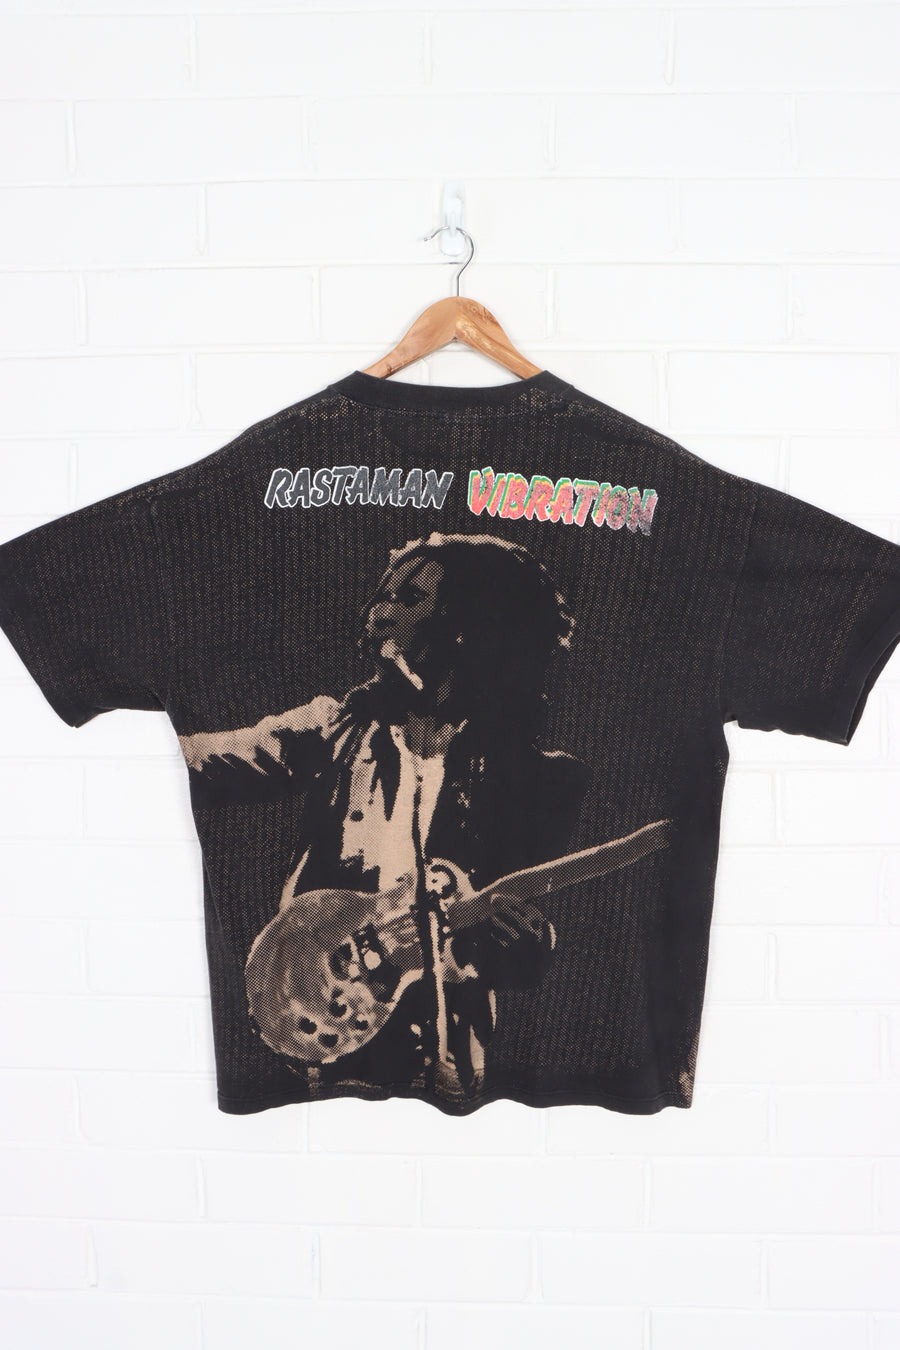 Bob Marley 'Rastaman Vibration' Front Back Single Stitch T-Shirt USA Made (XL)